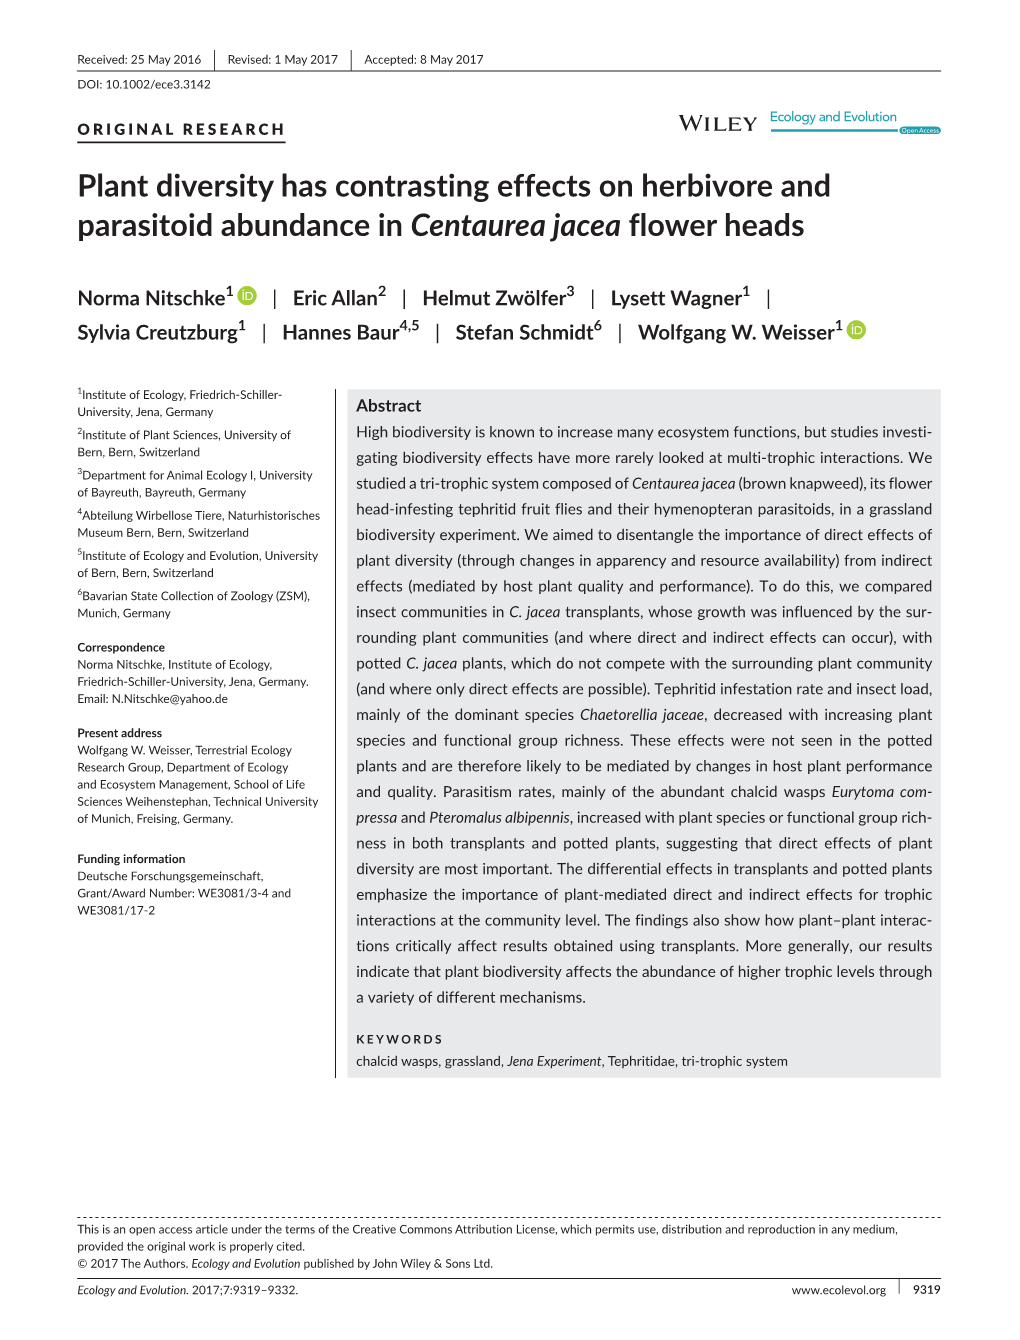 Plant Diversity Has Contrasting Effects on Herbivore and Parasitoid Abundance in Centaurea Jacea Flower Heads